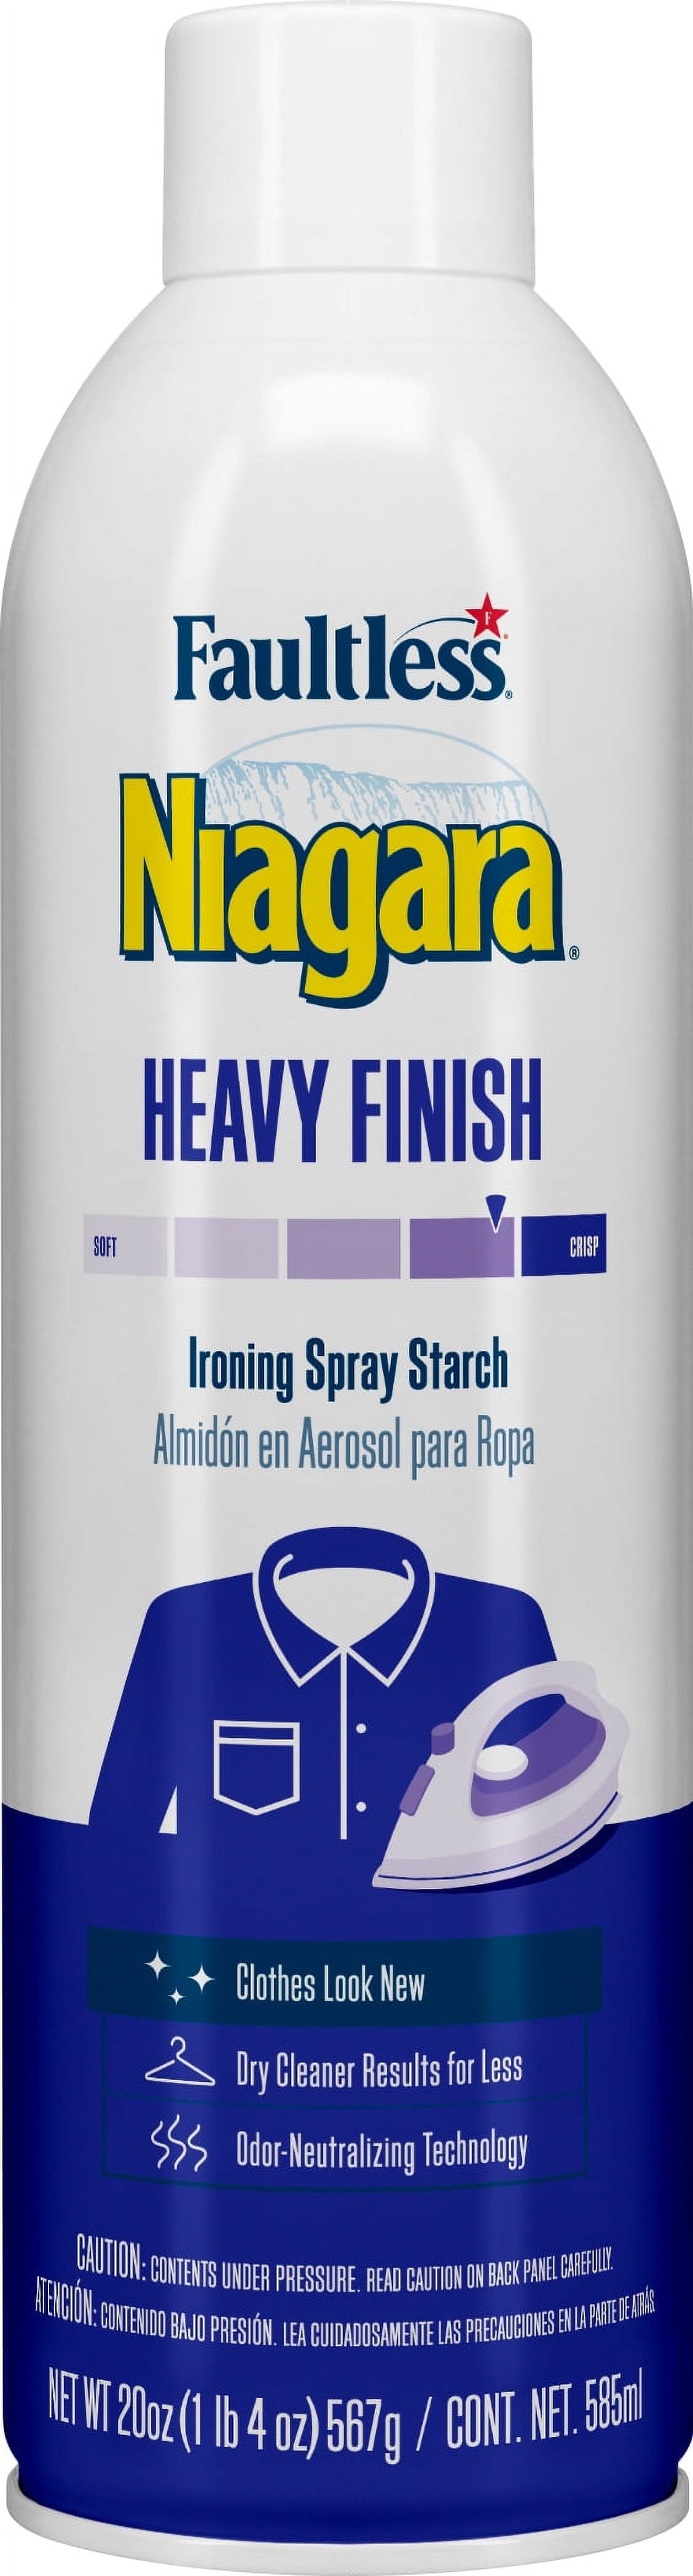 Faultless Ironing Spray Starch, Heavy Finish